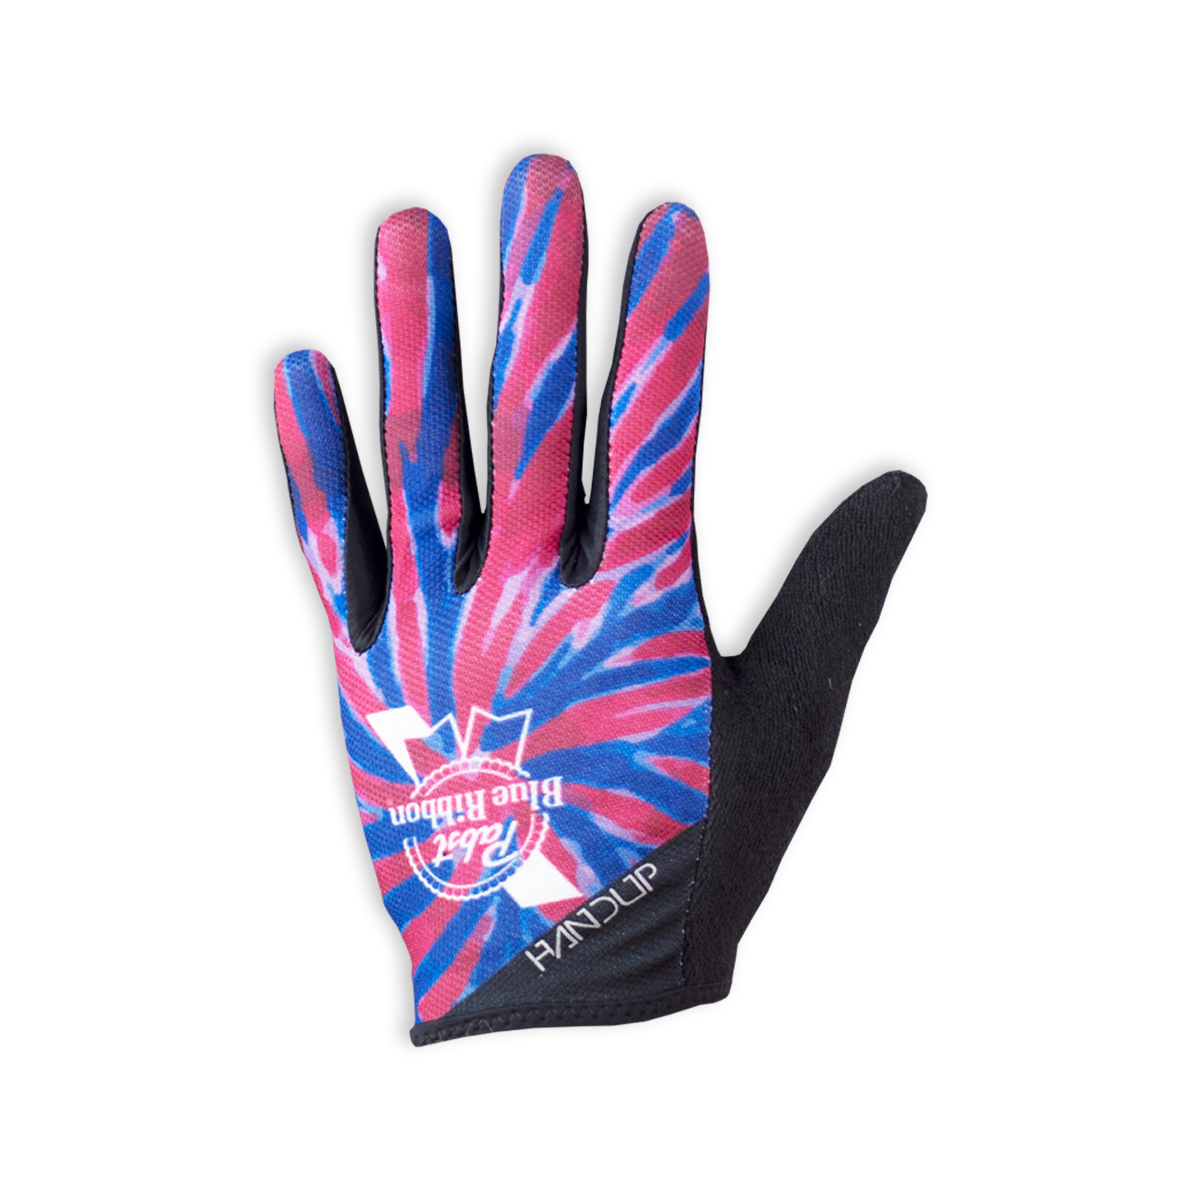 Gloves - Pabst Blue Ribbon Swirl Dye